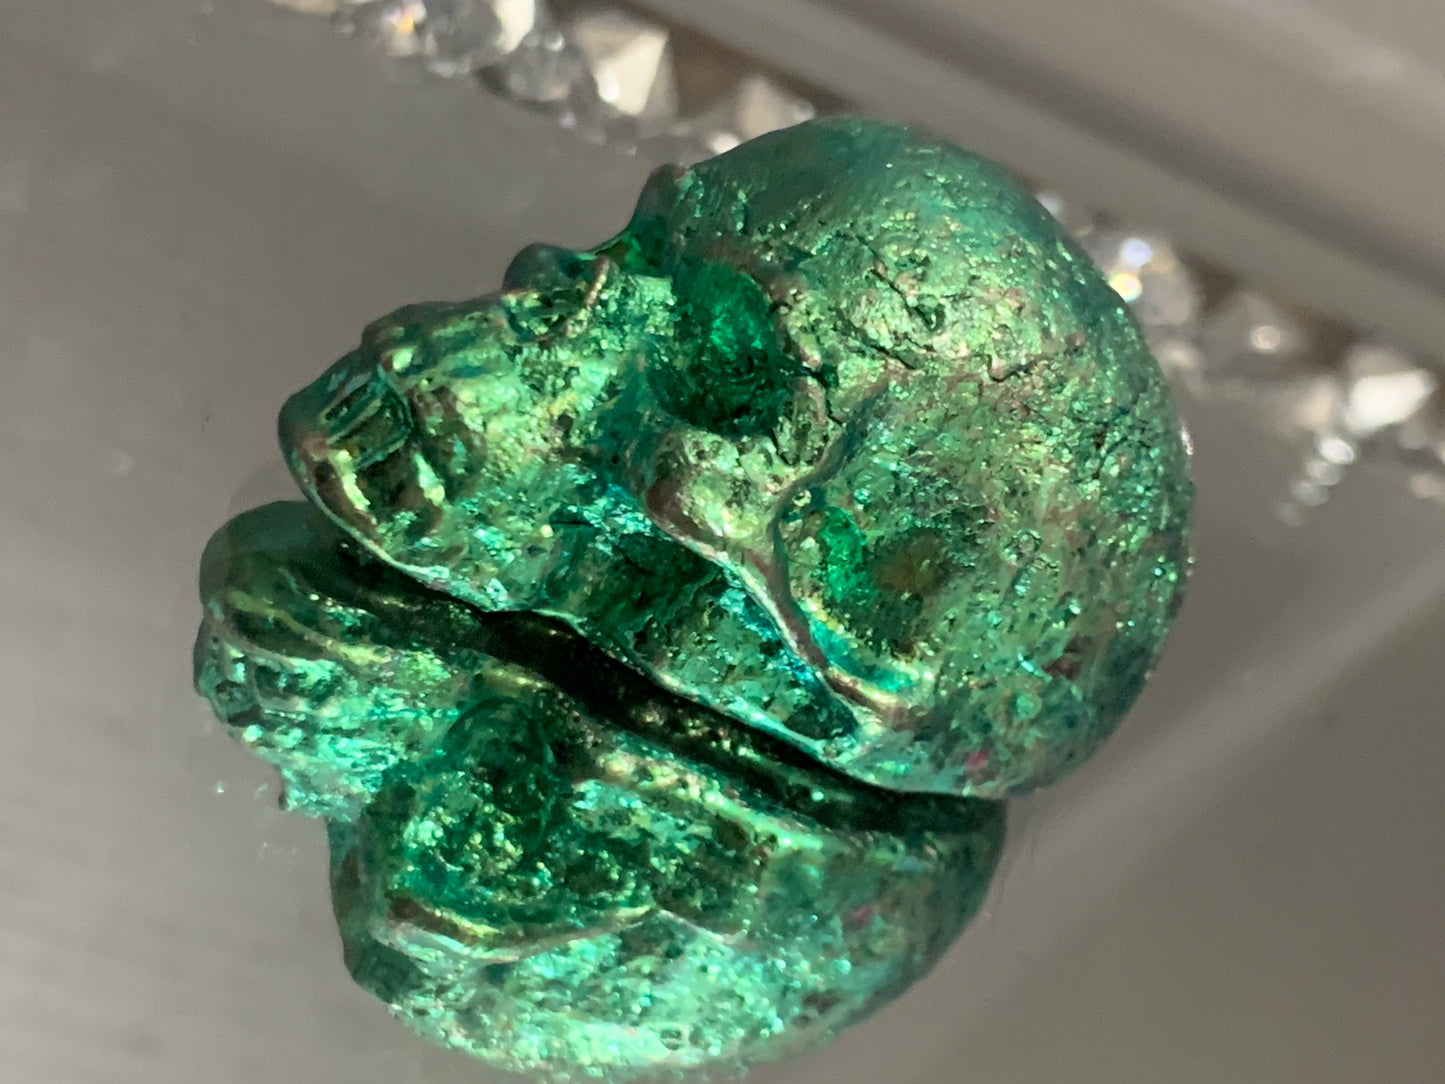 Green Bismuth Crystal Skull Metal Art Sculpture